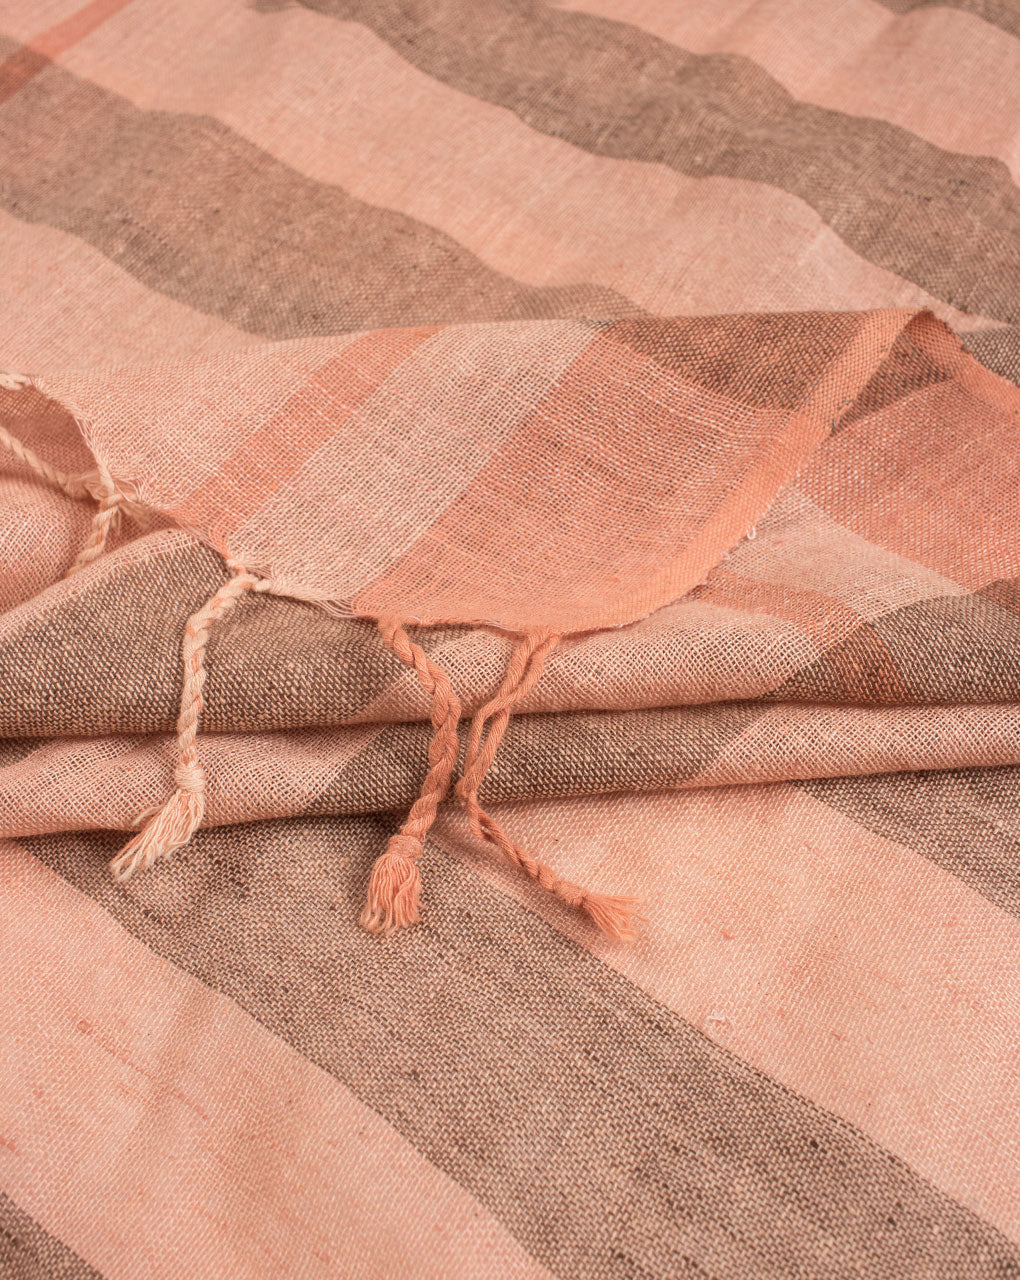 Brown Stripes Woven Bhagalpuri Cotton Stole - Fabriclore.com